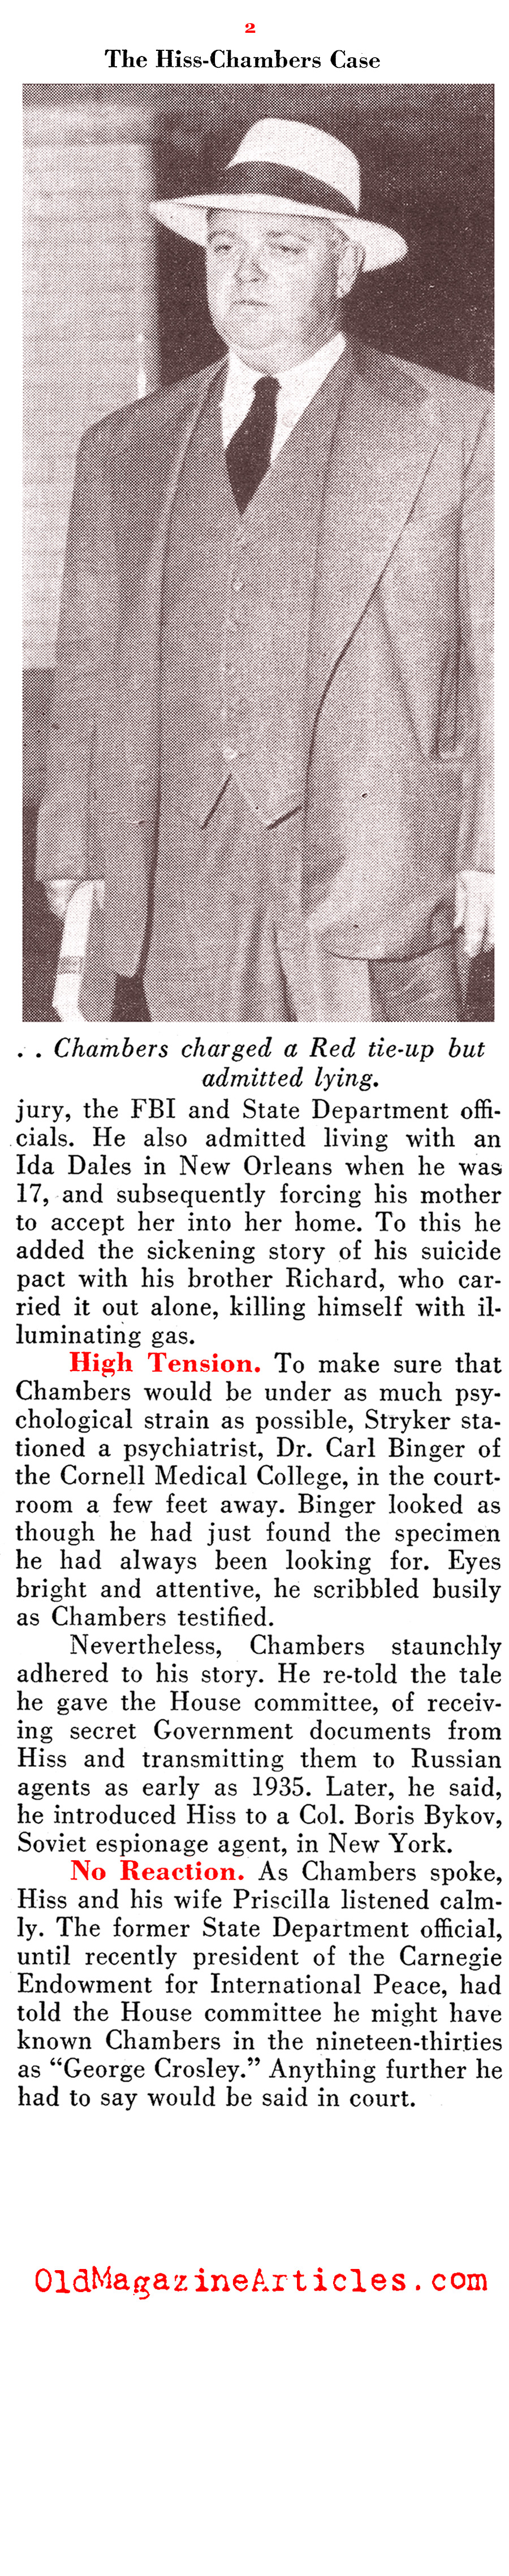 The Hiss-Chambers Case  (Pathfinder Magazine, 1949)